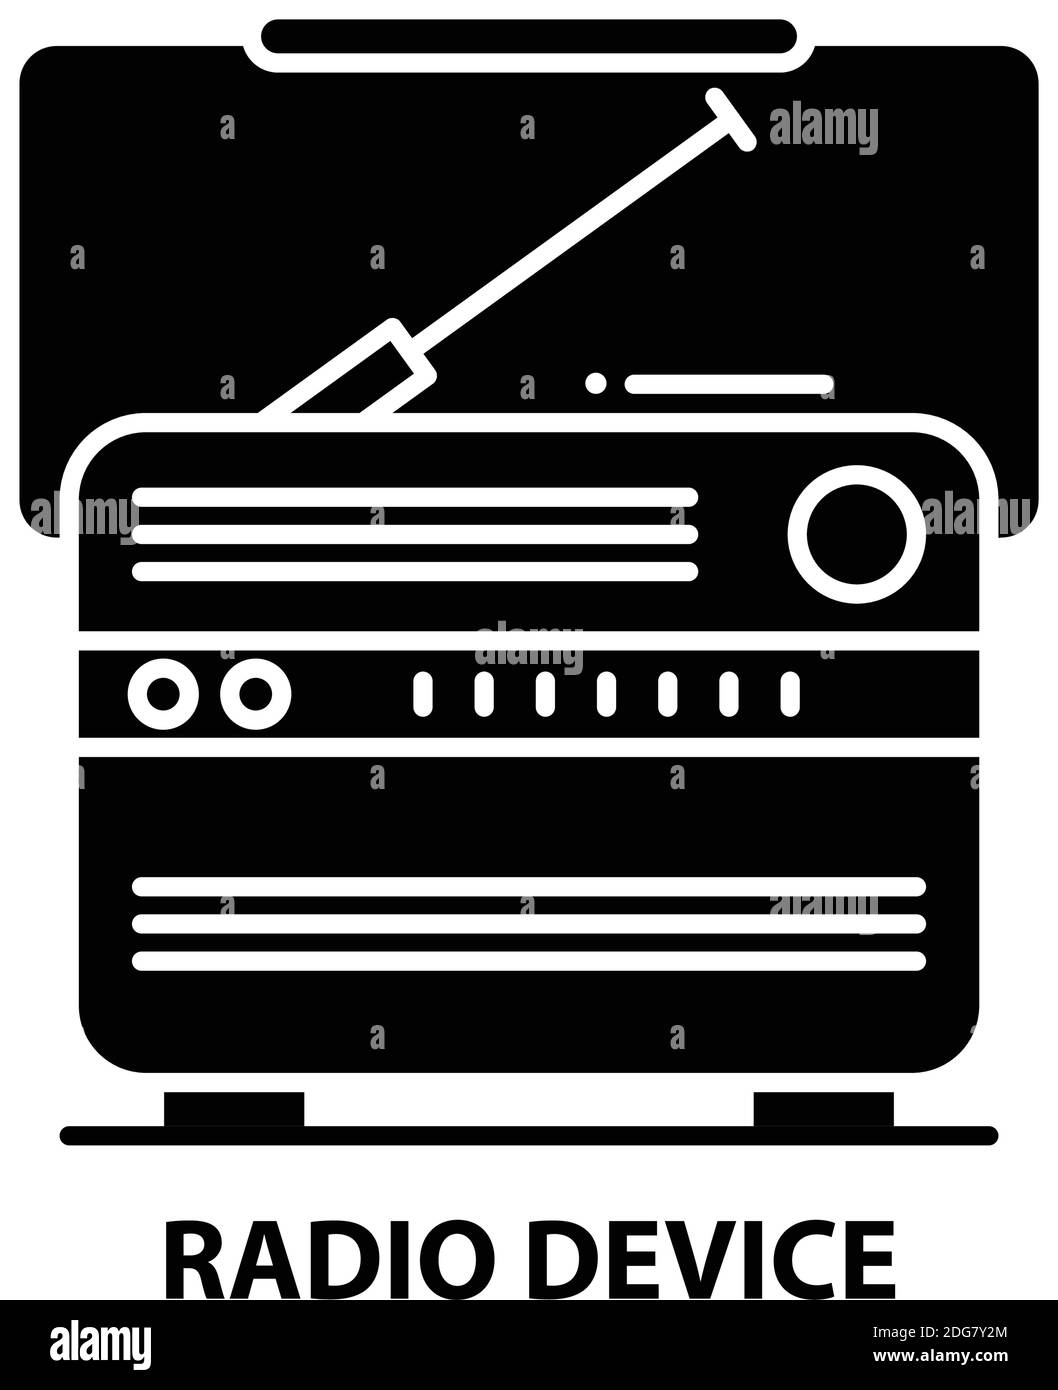 radio device icon, black vector sign with editable strokes, concept illustration Stock Vector